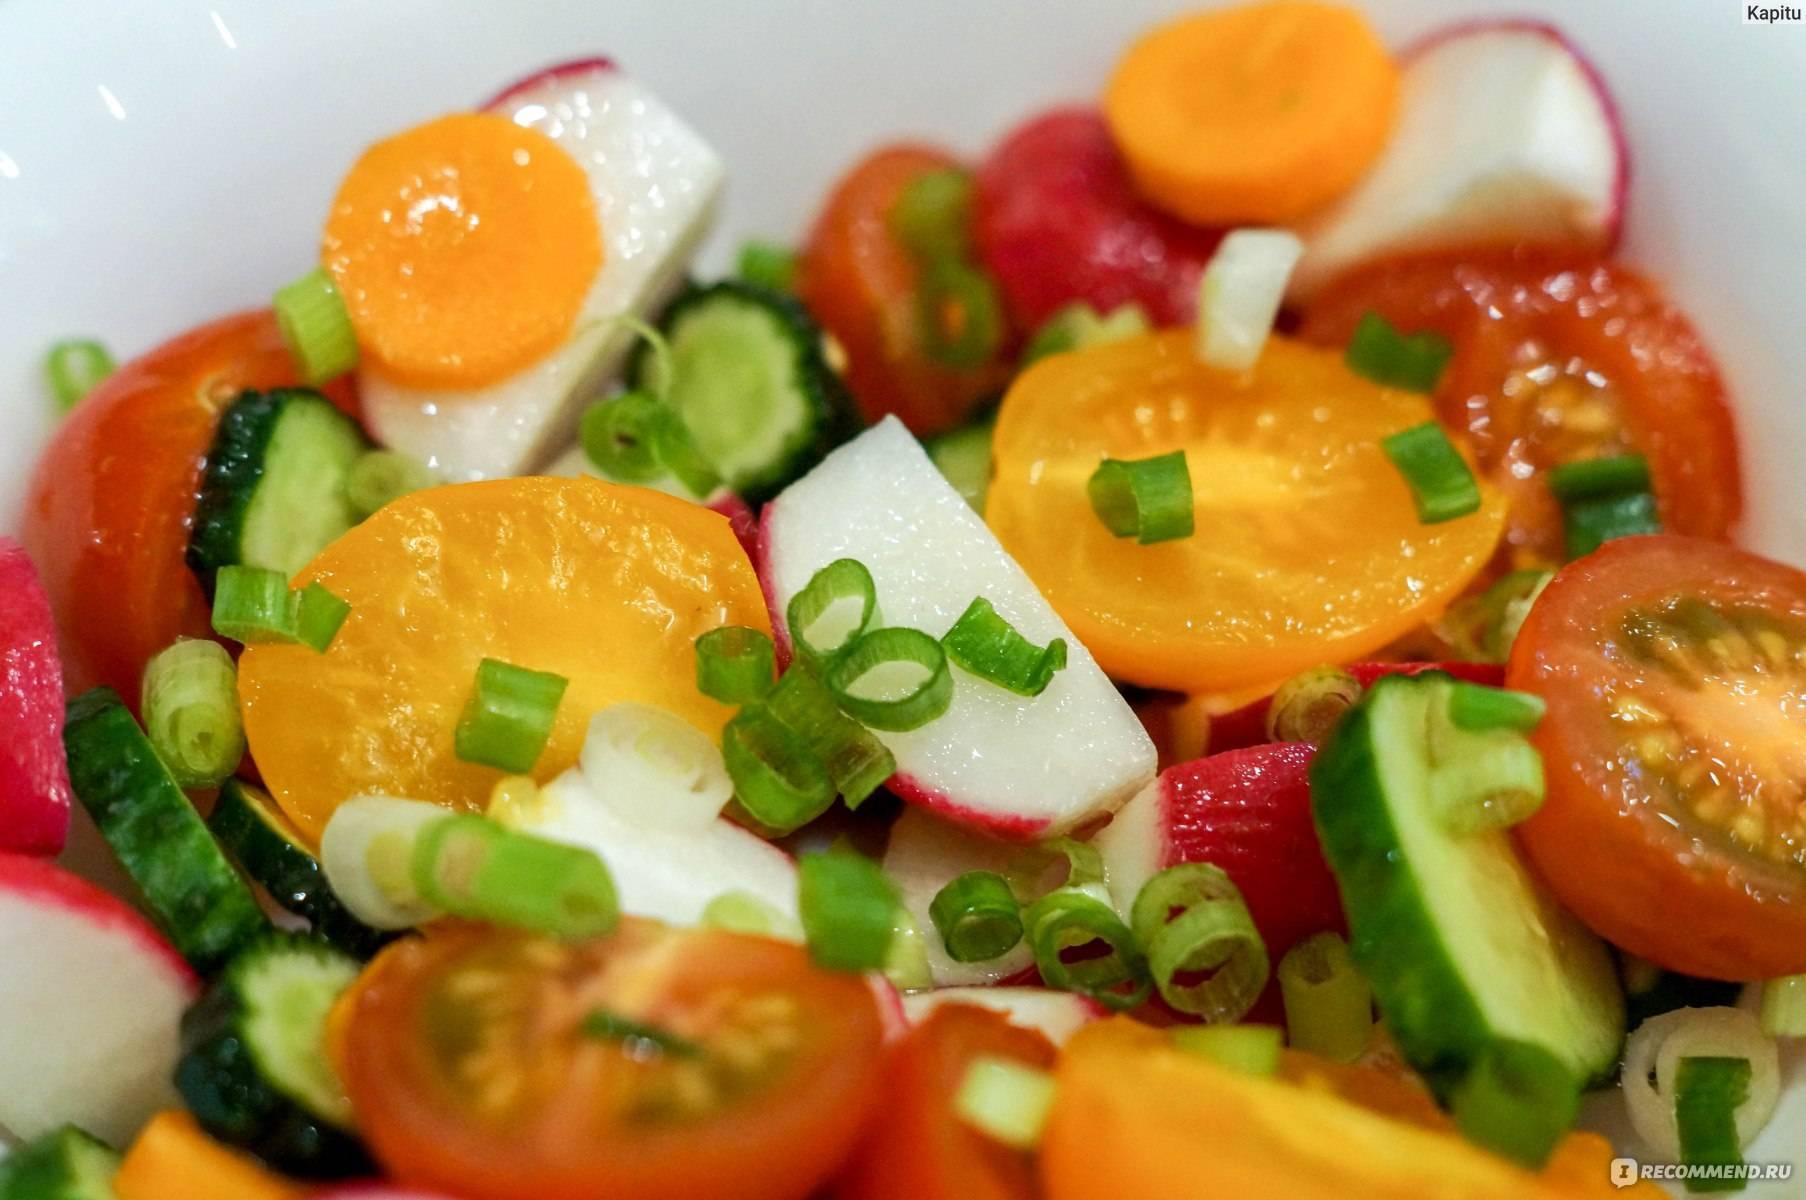 Полезен ли ваш салат для организма?